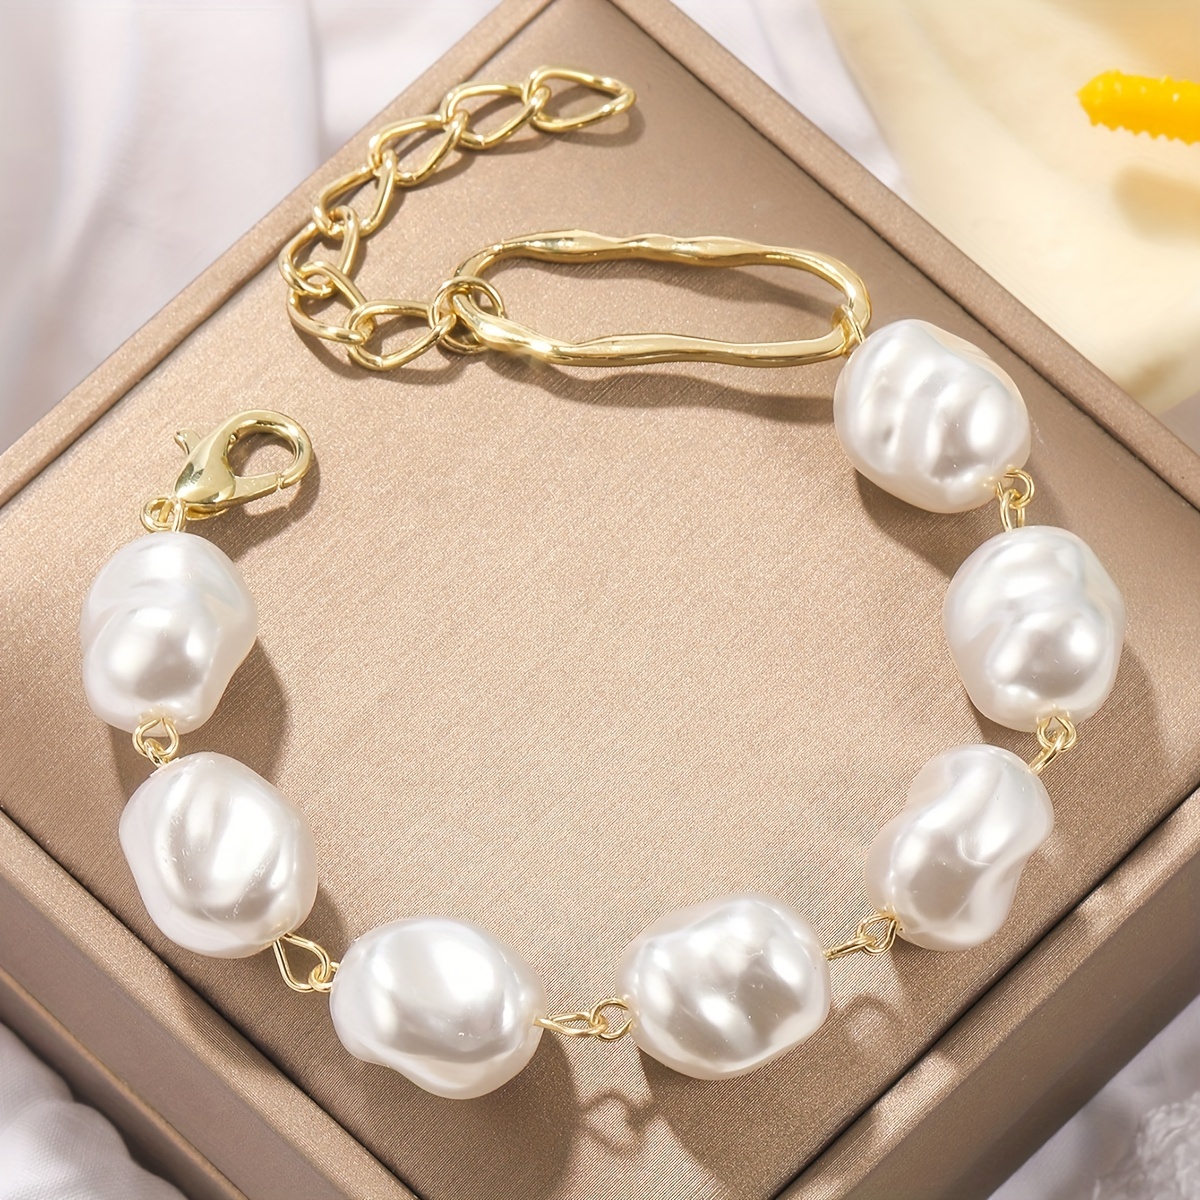 

Bohemian Baroque Design Irregular Shape Faux Pearl Bracelet Jewelry Gift For Women Girls